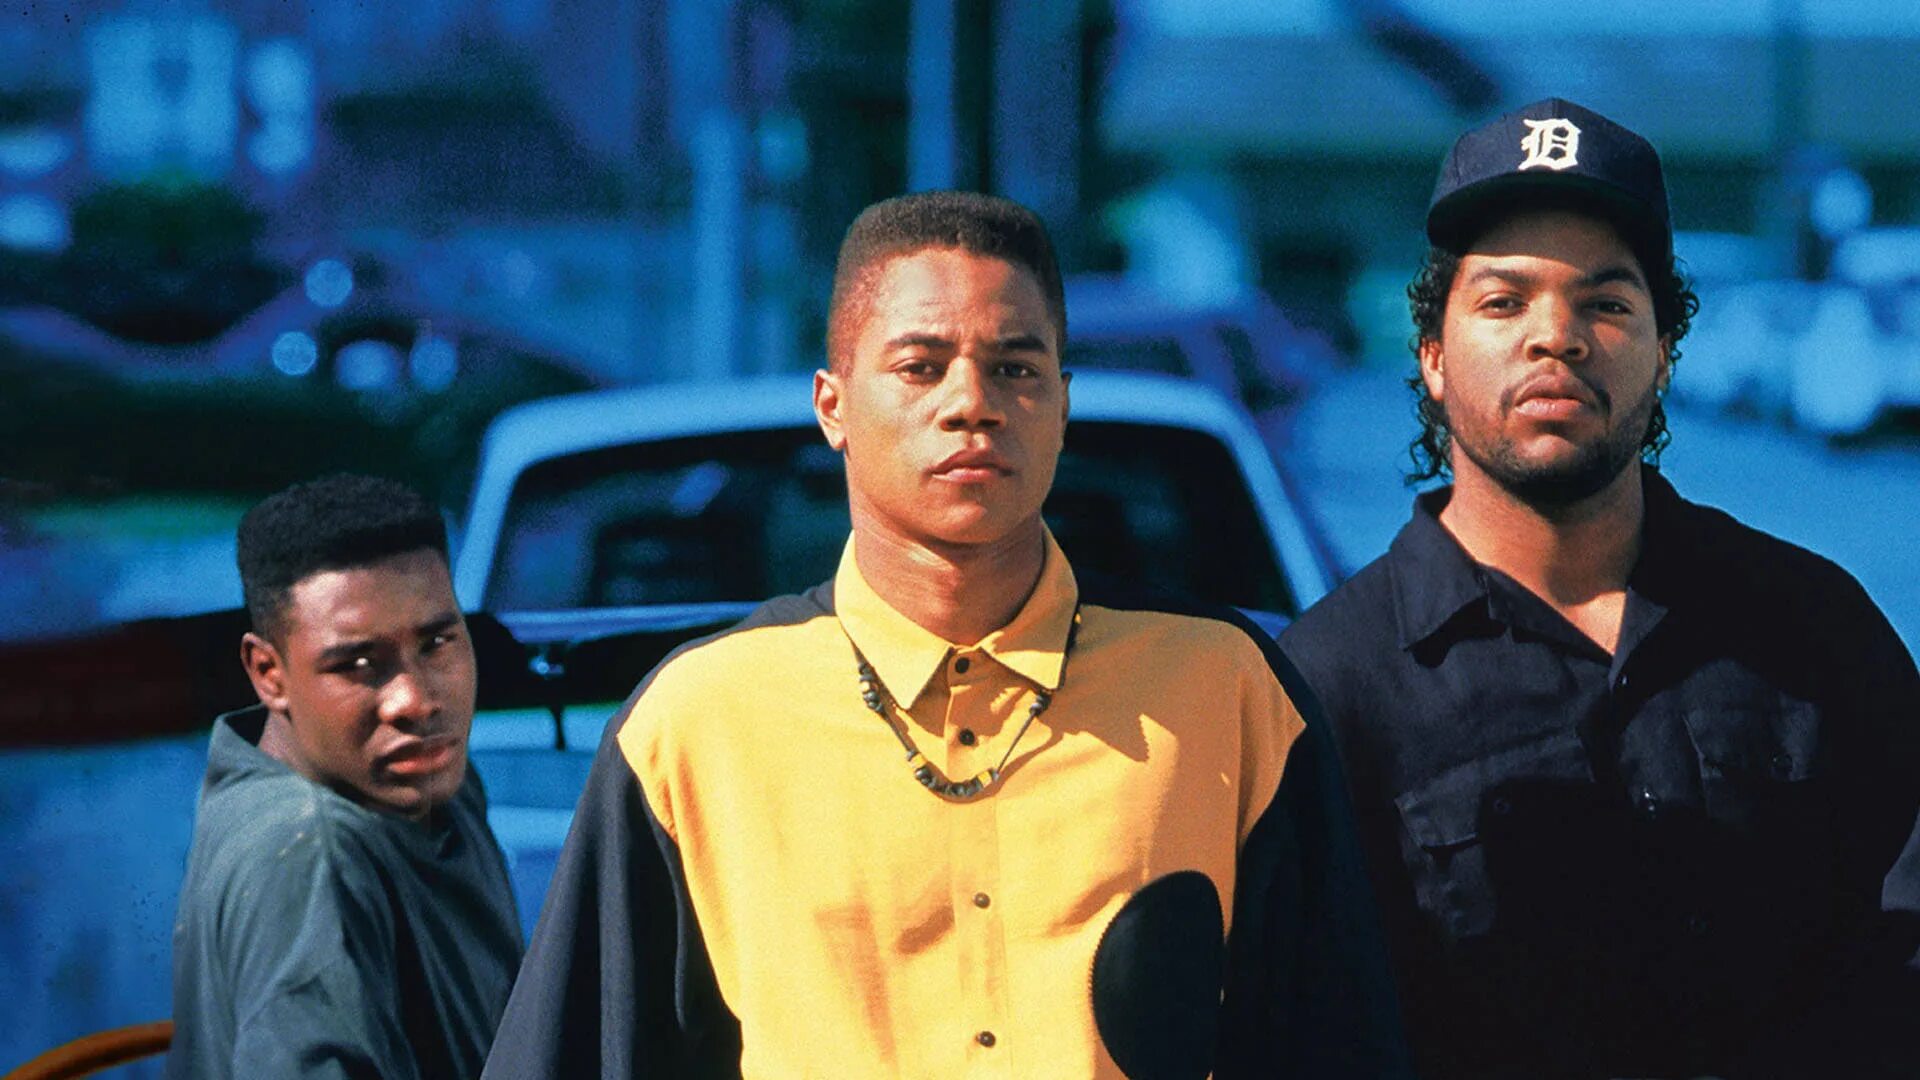 Ghetto drive. Айс Кьюб ребята с улицы. Ребята с улицы (1991) Boyz n the Hood.